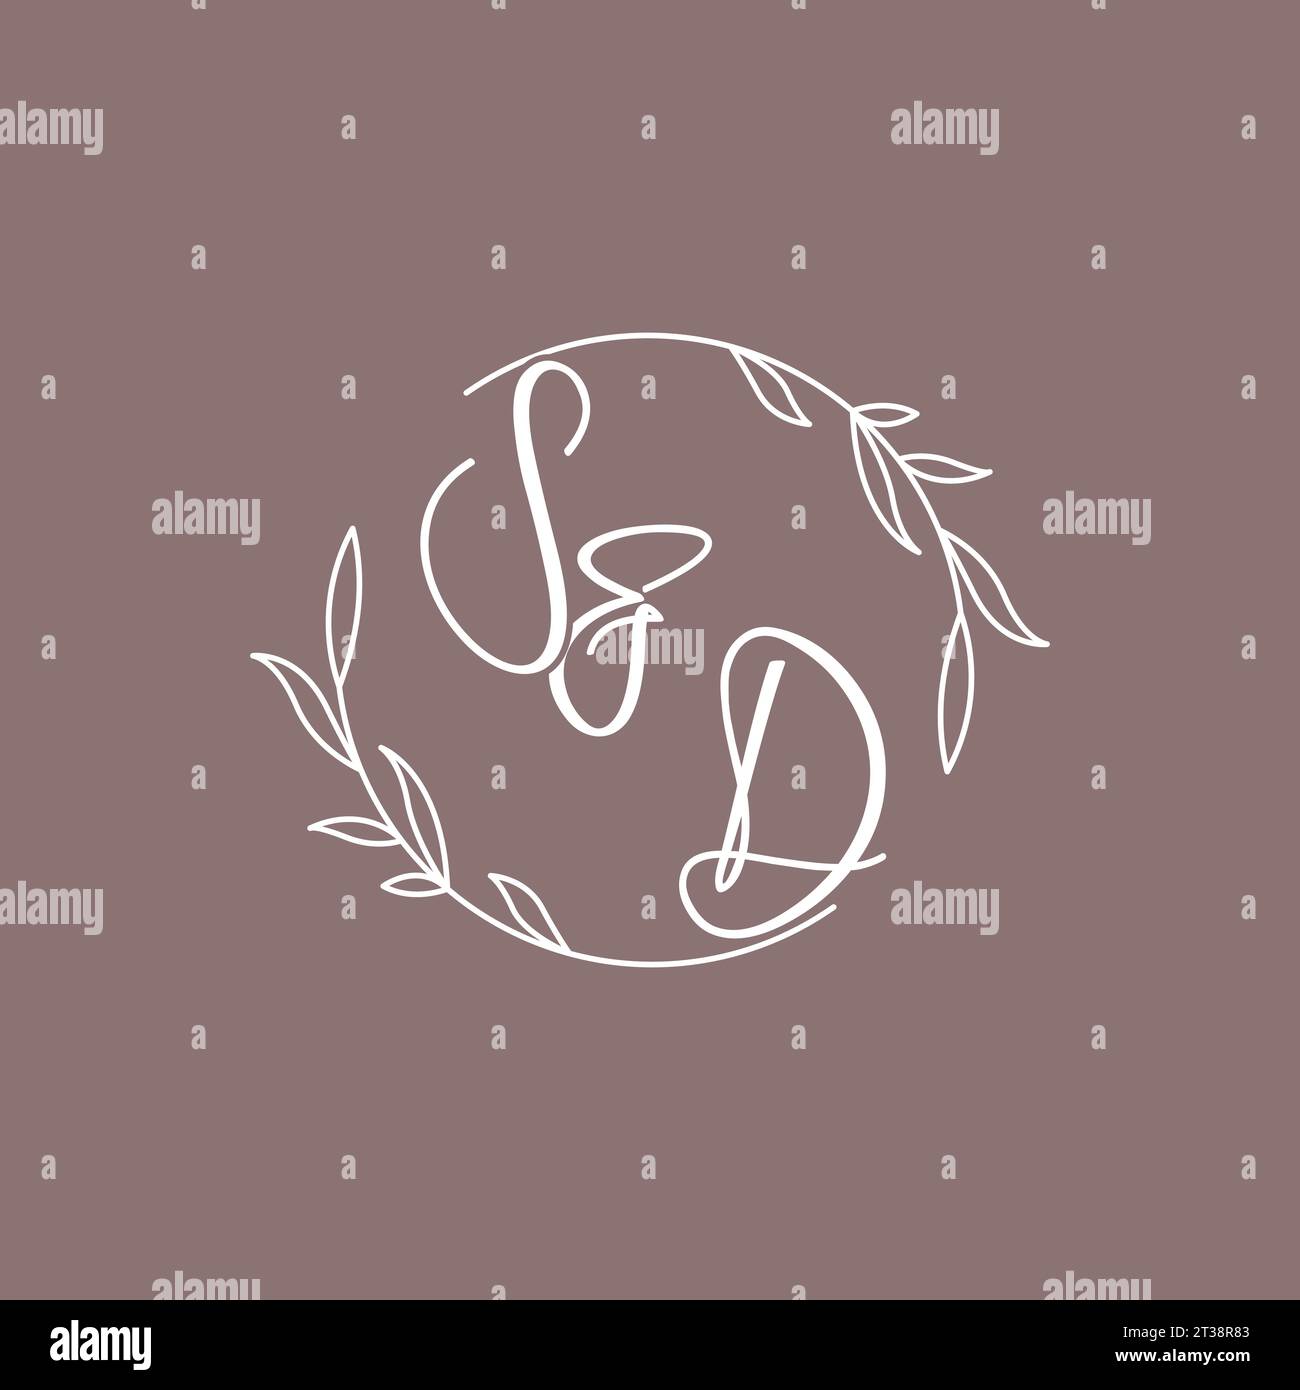 SD wedding initials monogram logo ideas vector graphic Stock Vector